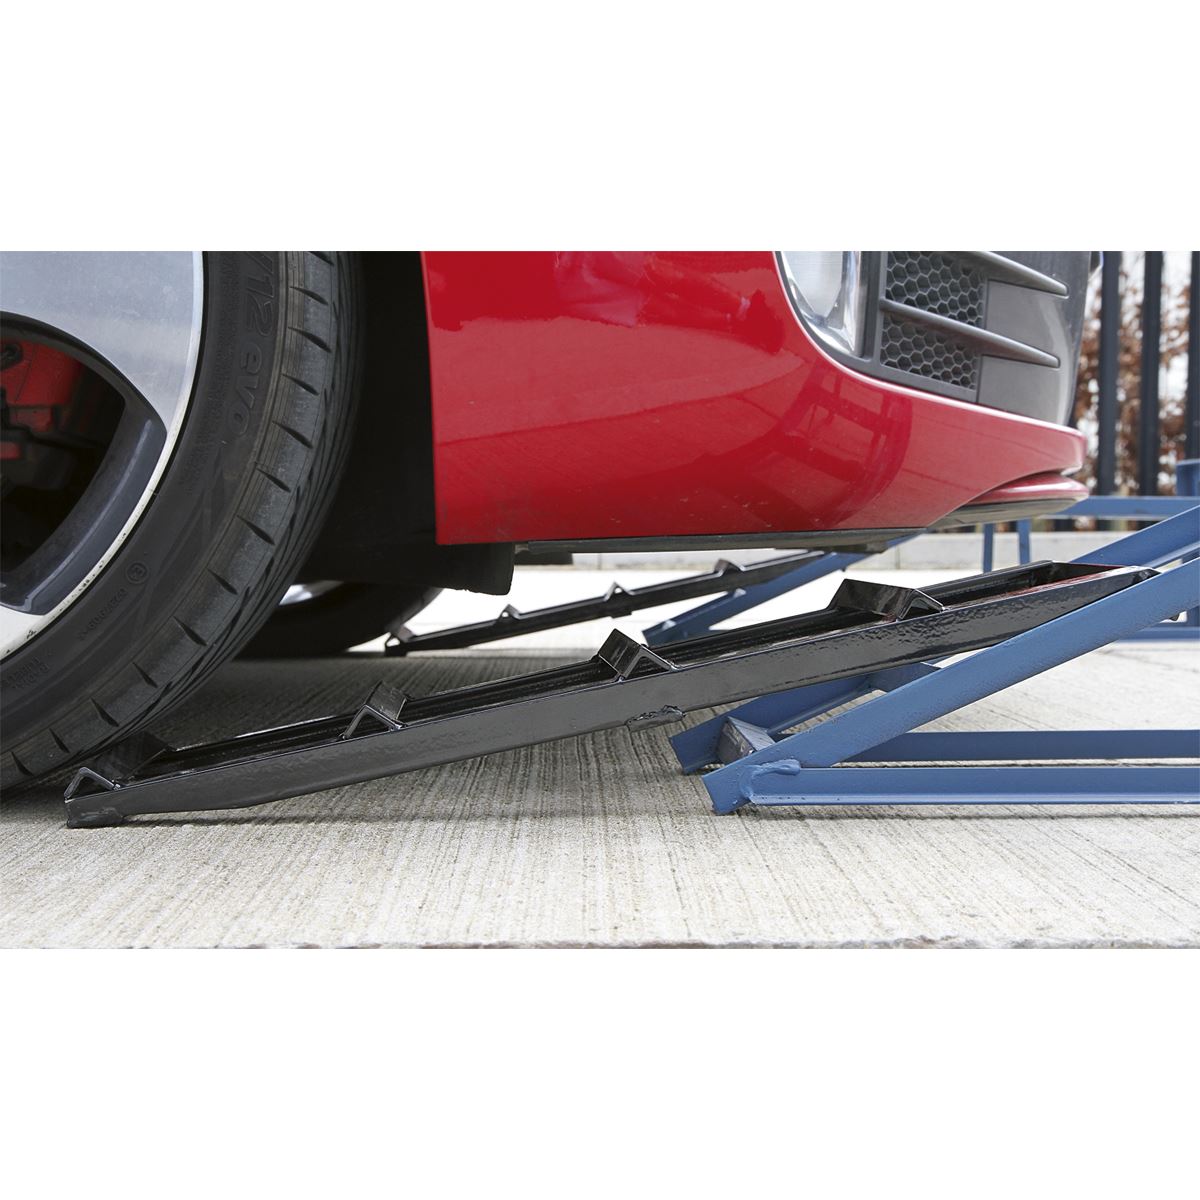 Sealey Car Ramp Extensions 400kg Each/800kg per Pair